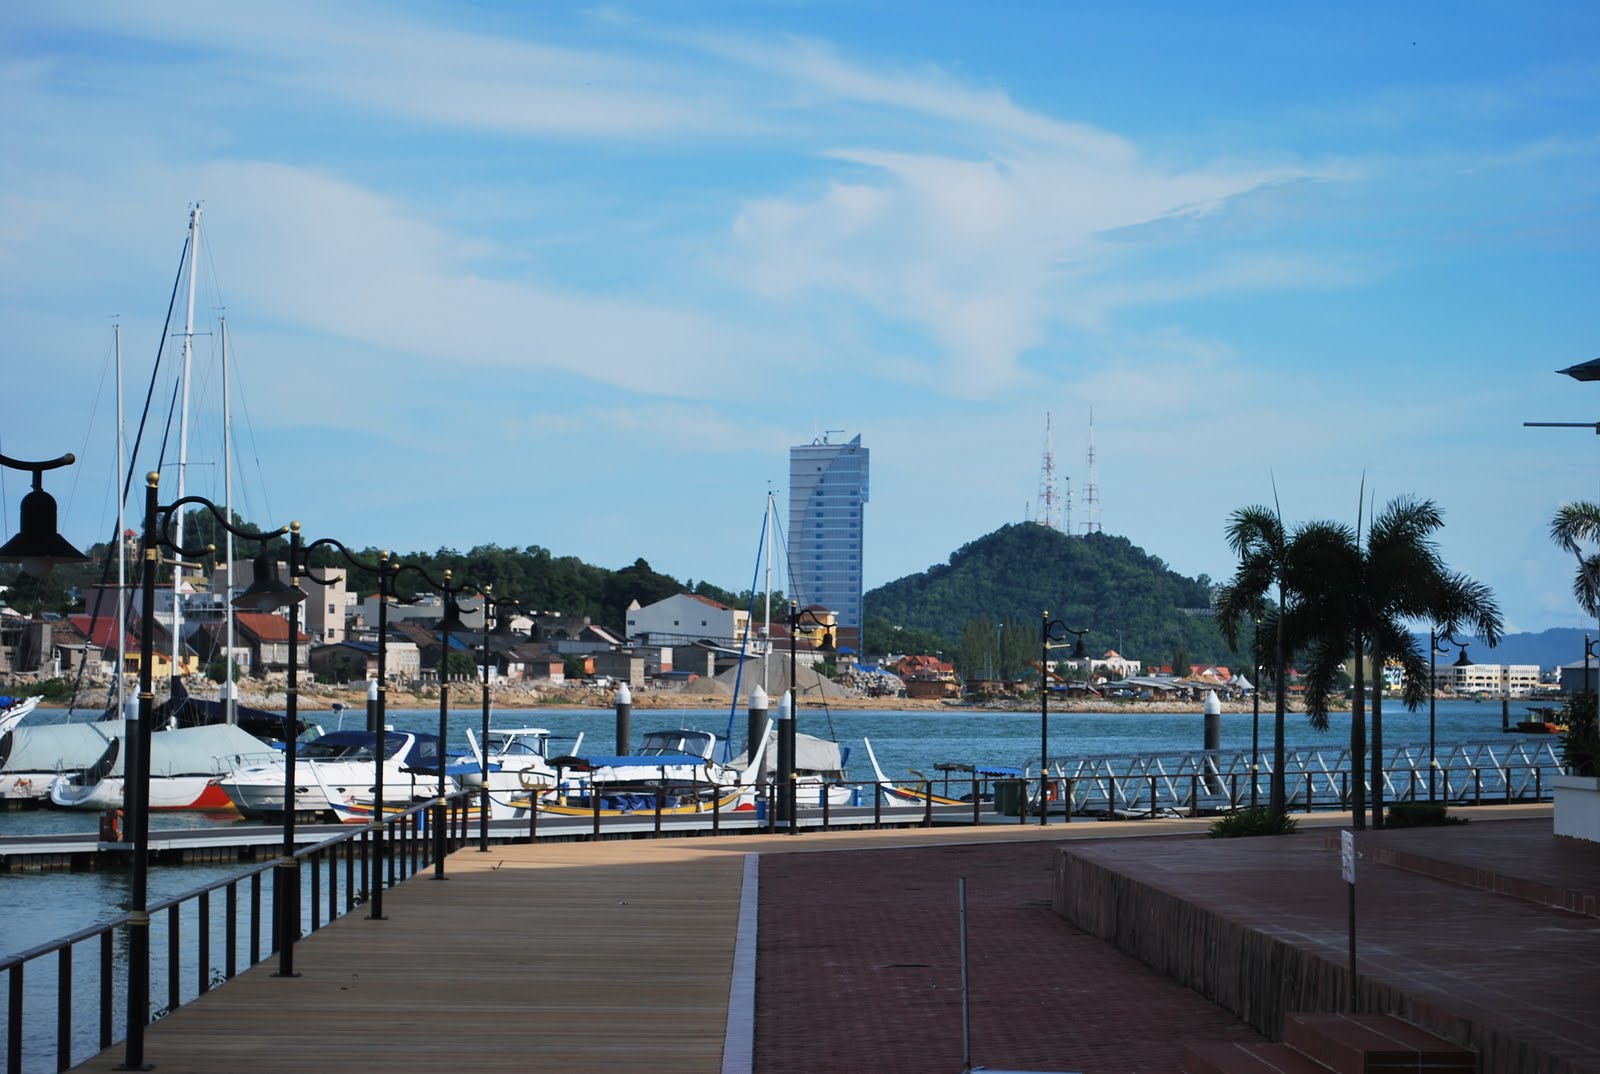 Kuala Terengganu Waterfront